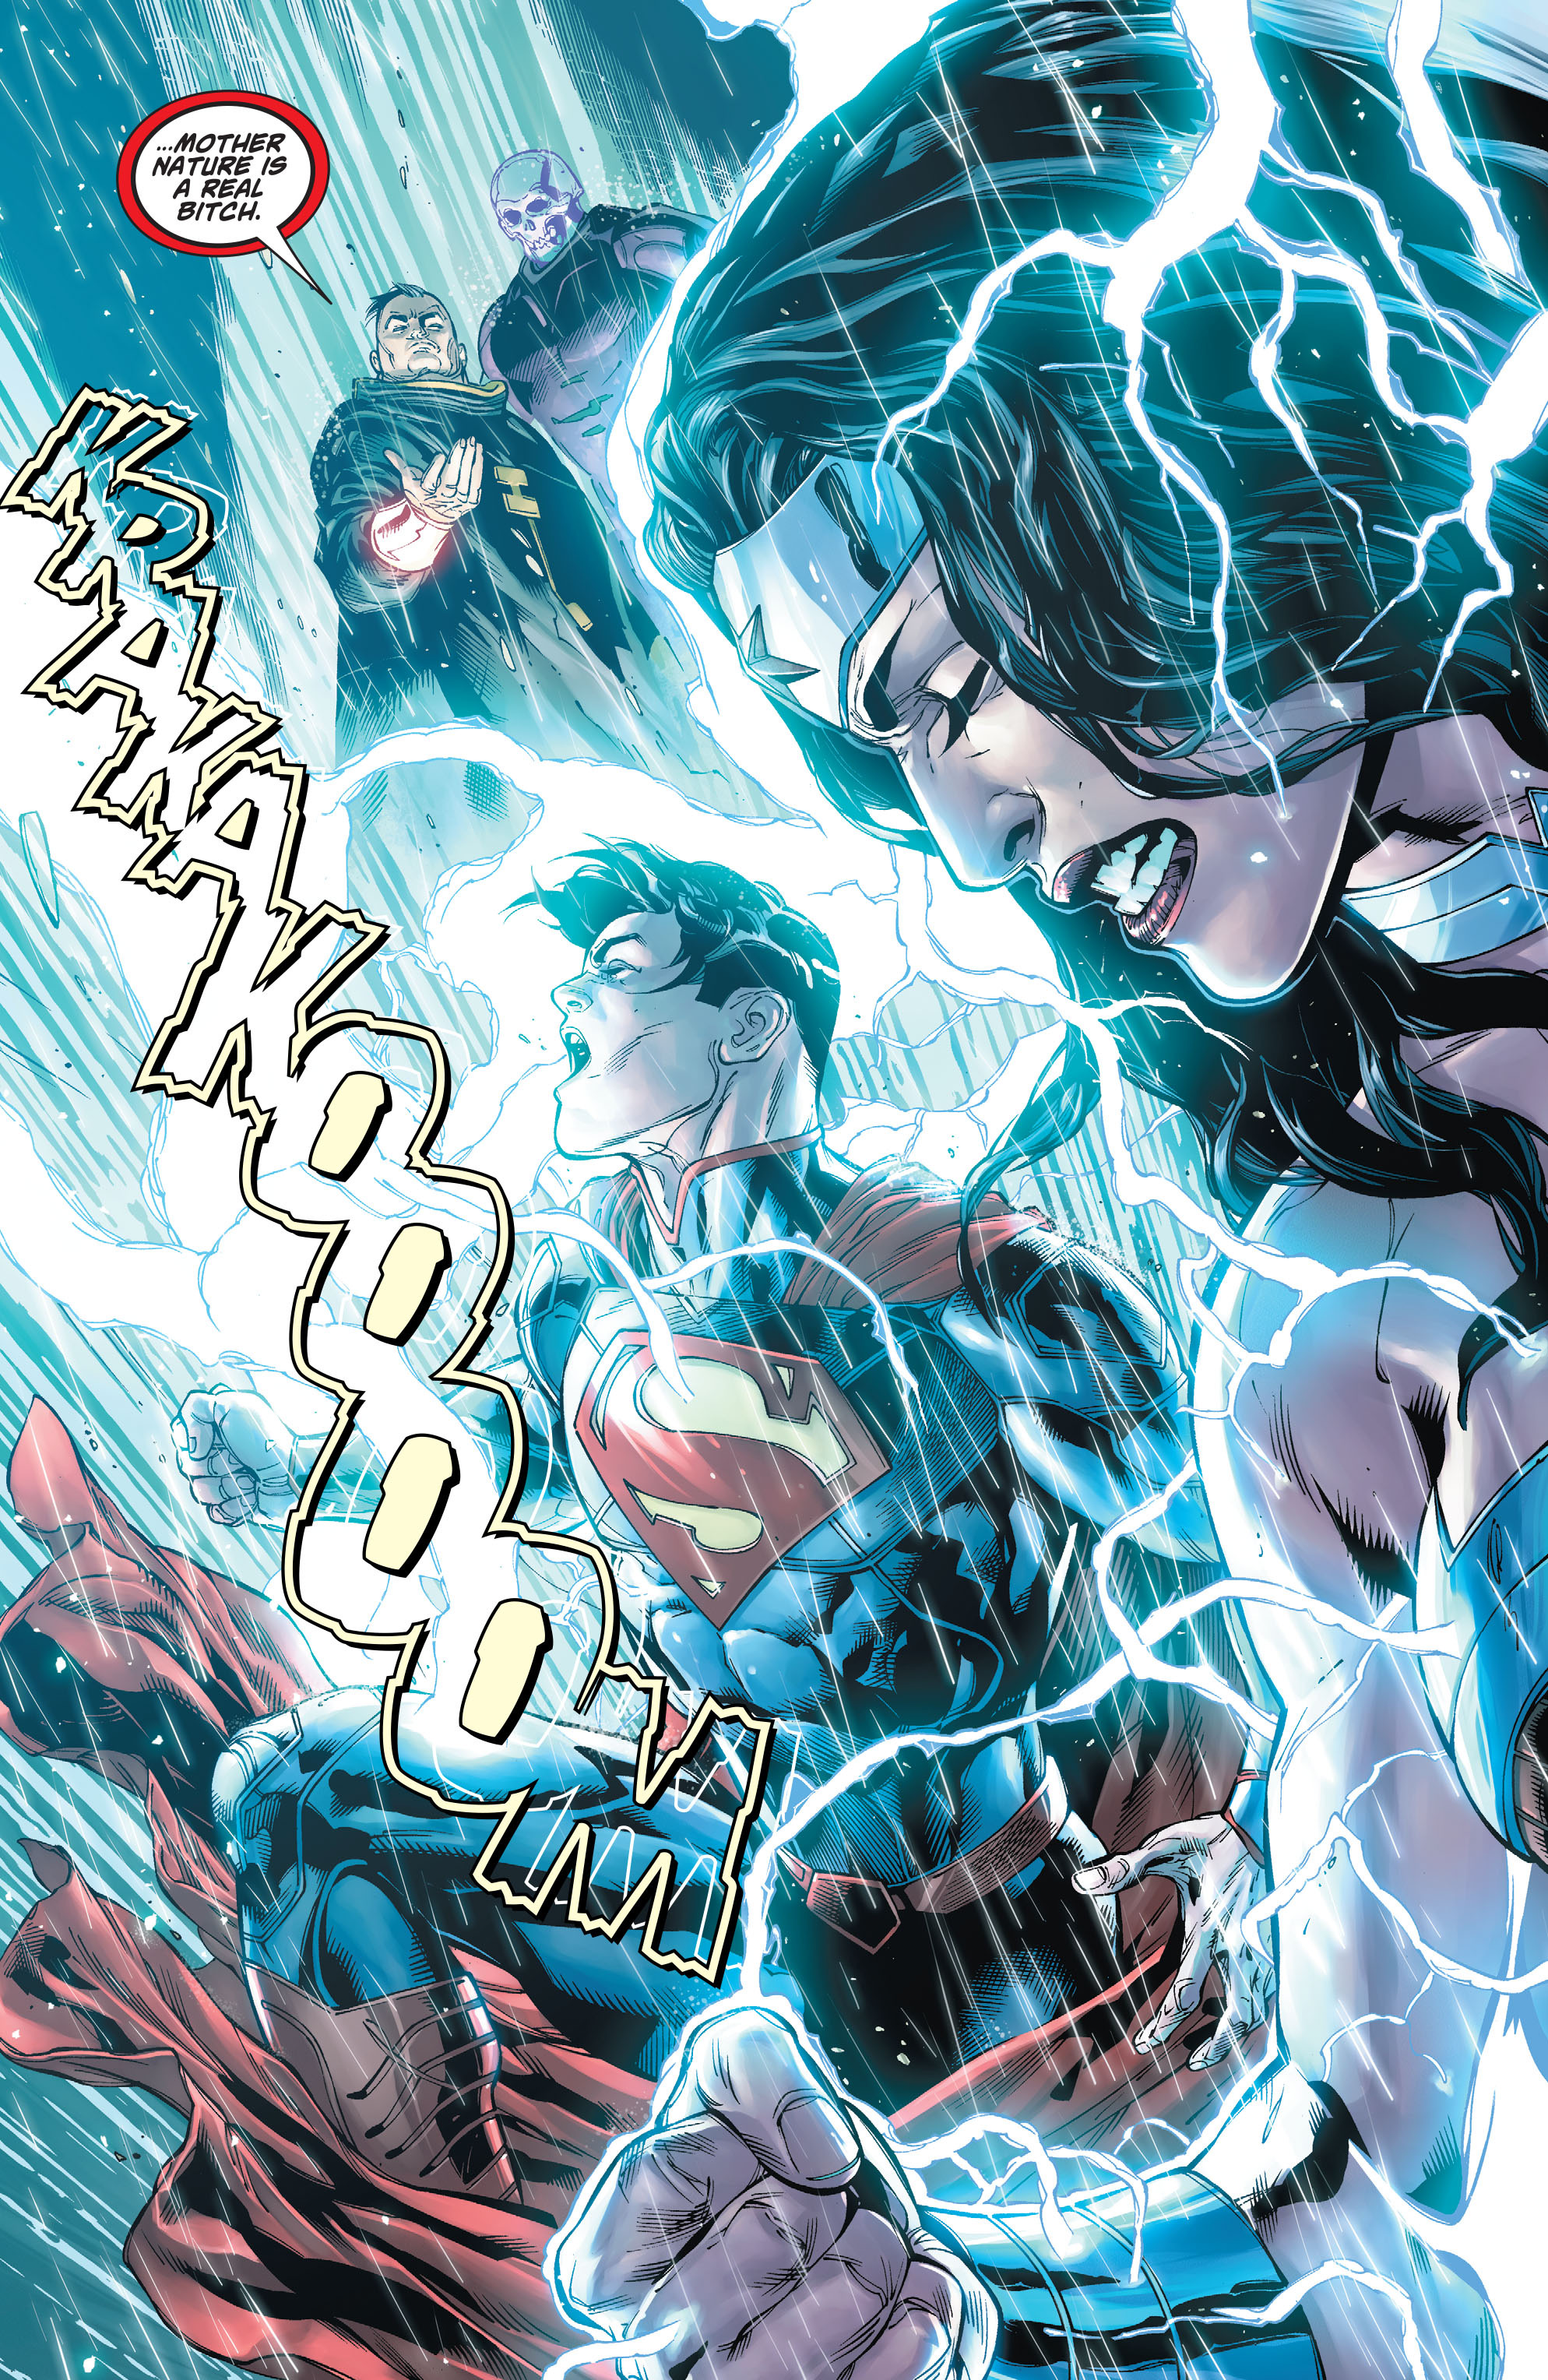 Superman Wonder Woman 2013 013 020